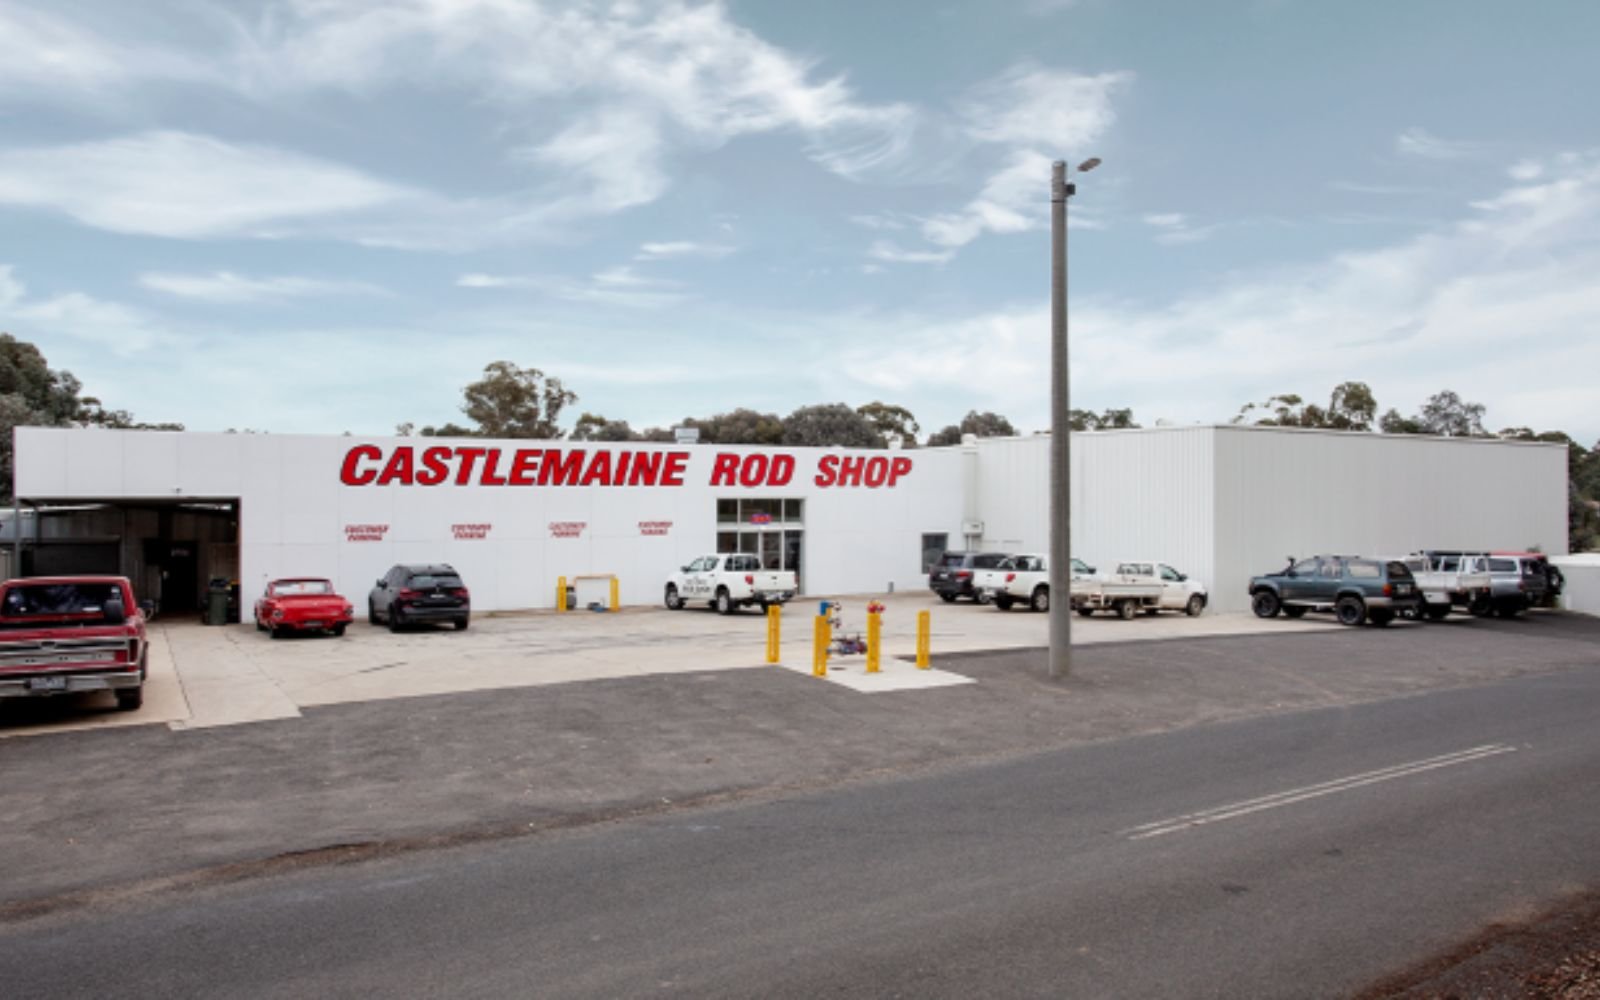 Castlemaine Rod Shop industrial workshop